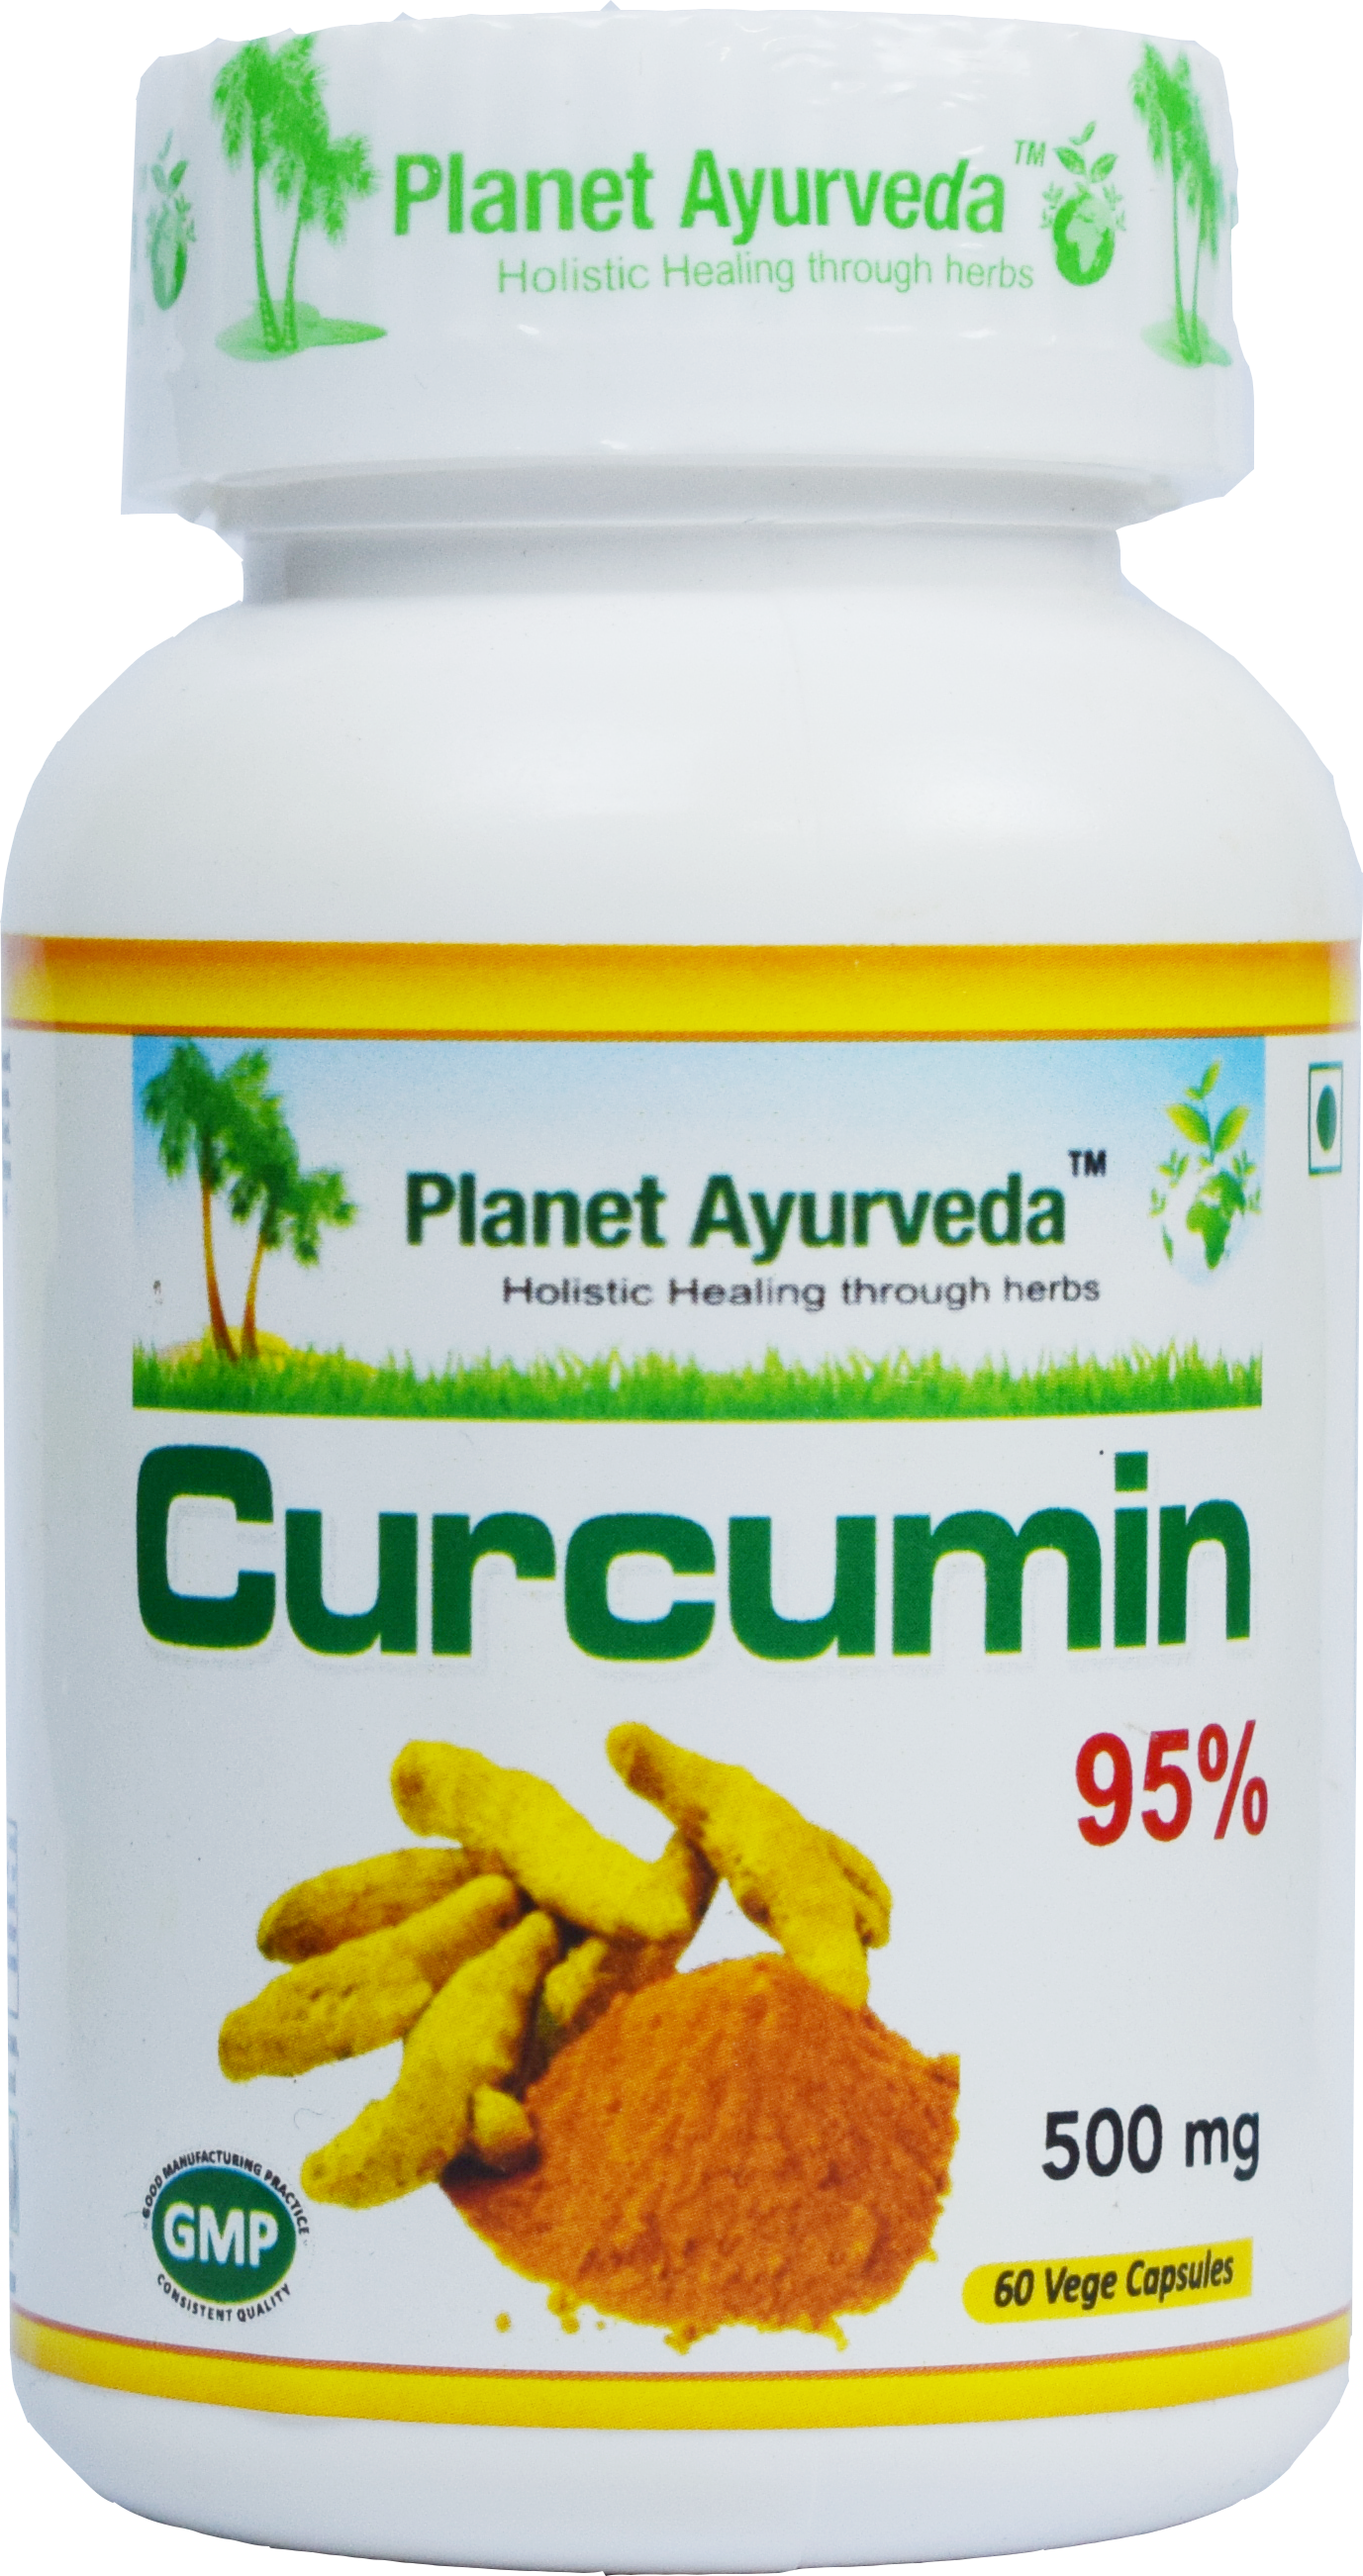 Planet Ayurveda Curcumin 95% Capsules